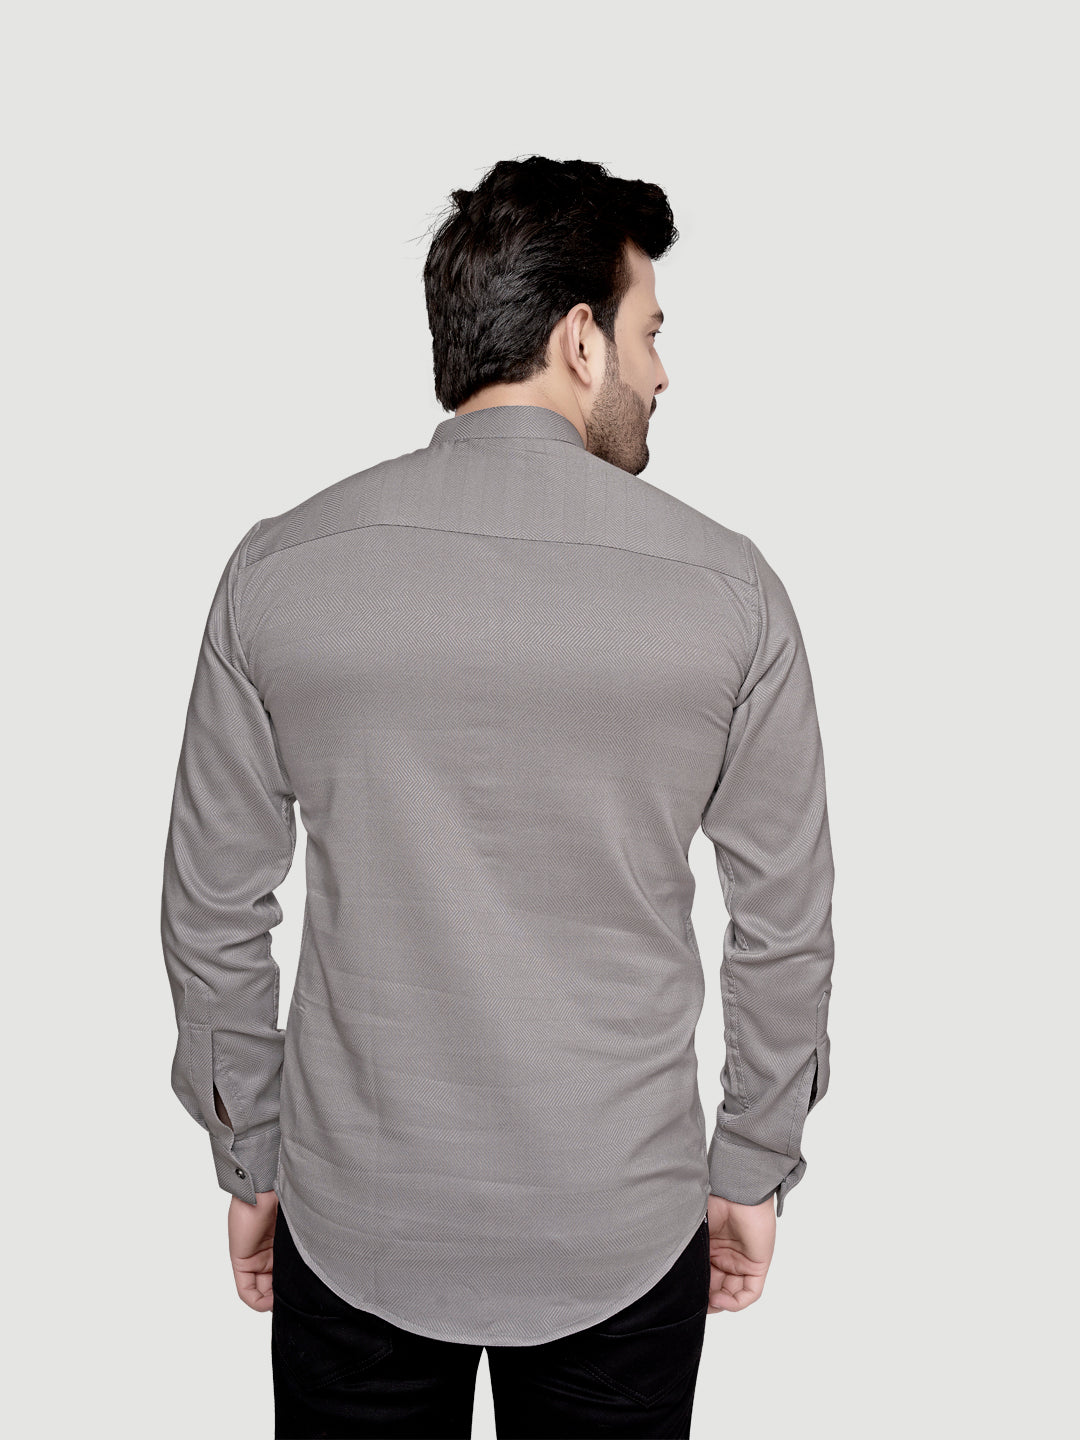 Black and White Shirts Men's Designer Short Kurta with Metal Buttons Light Grey